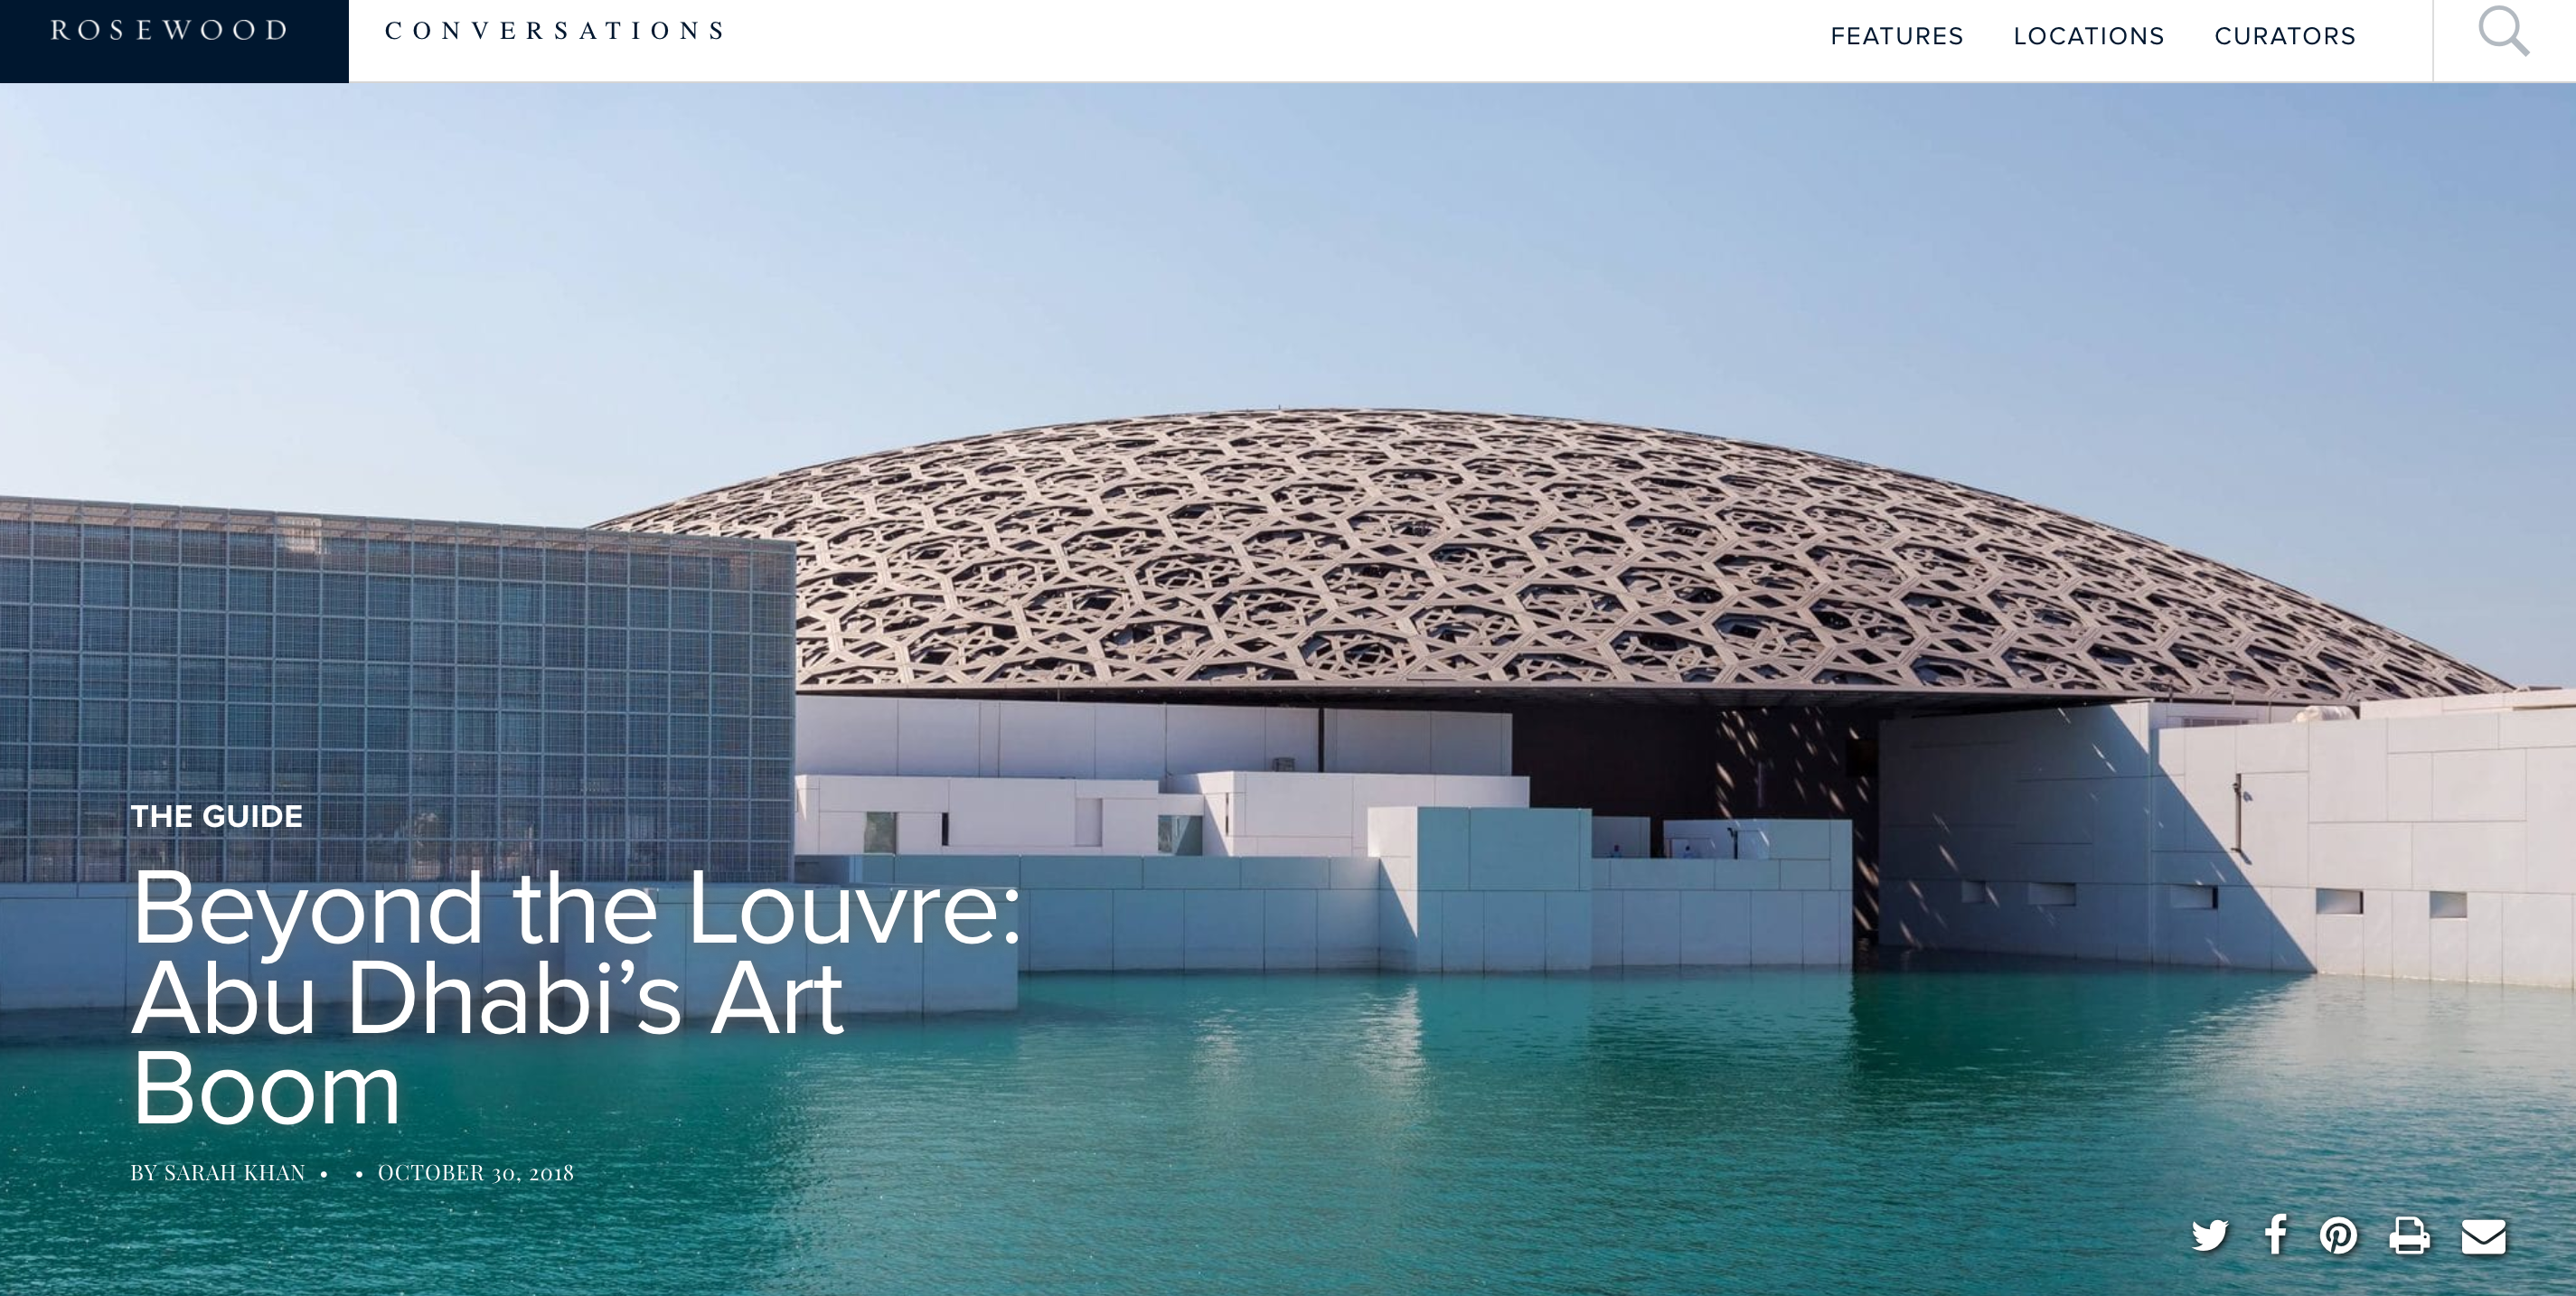 Rosewood: Beyond the Louvre – Abu Dhabi’s Art Boom